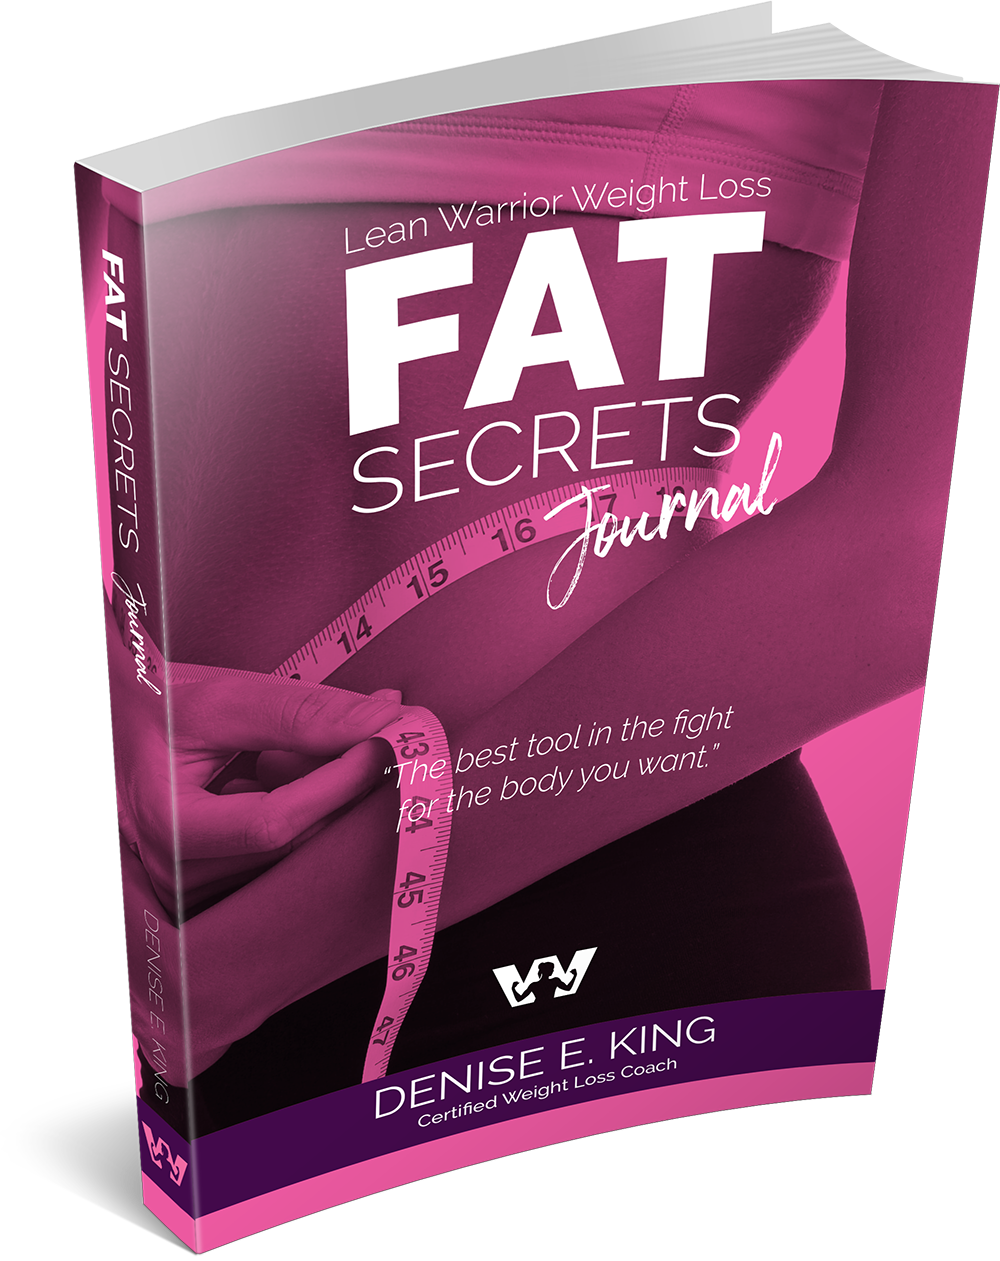 FAT SECRETS Journal